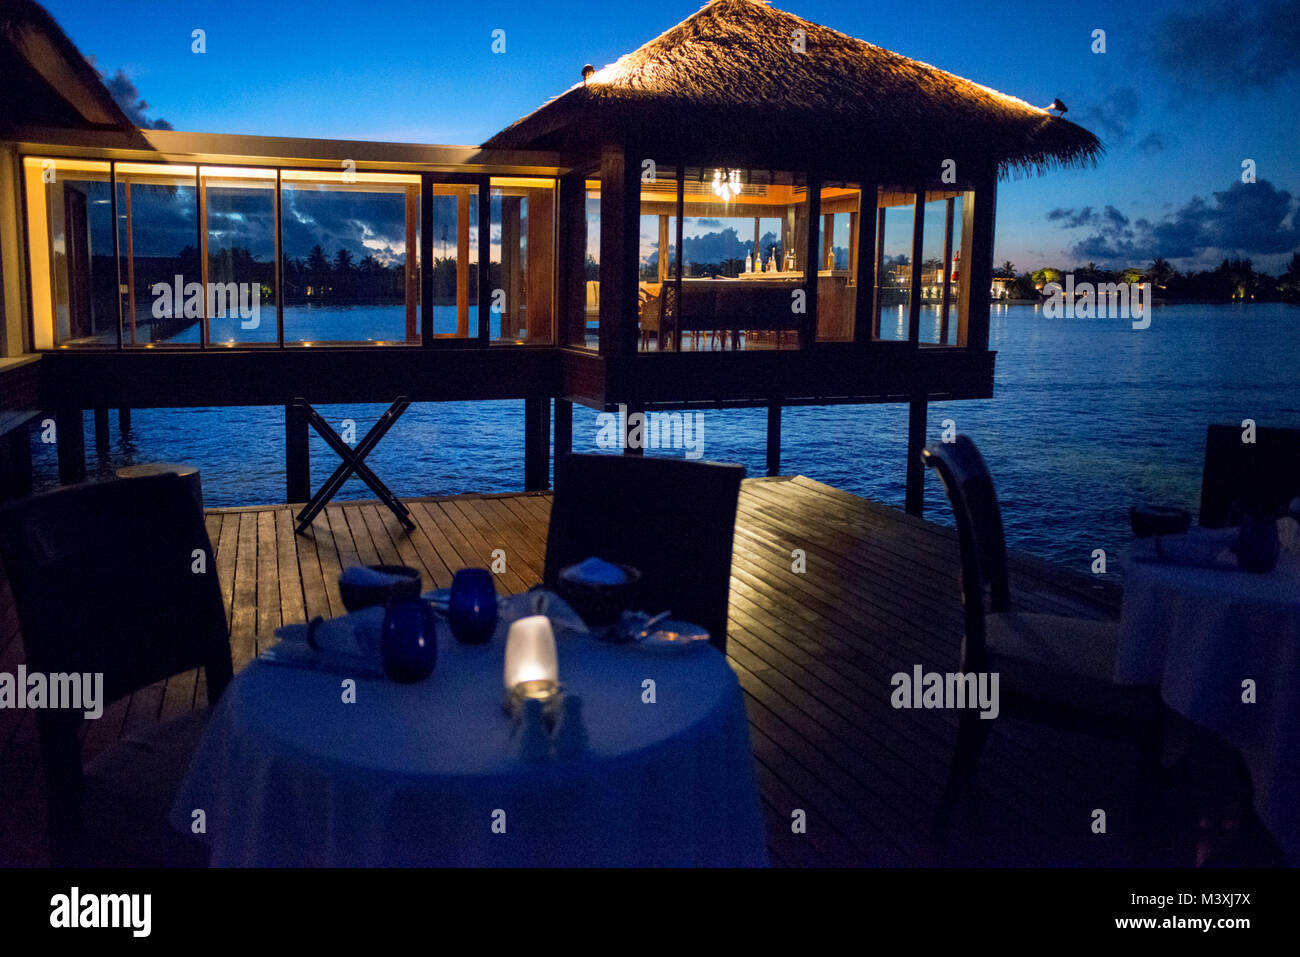 The Residence Hotel and Resort restaurant, Gaafu Alifu Atoll. Maldives Islands. Stock Photo